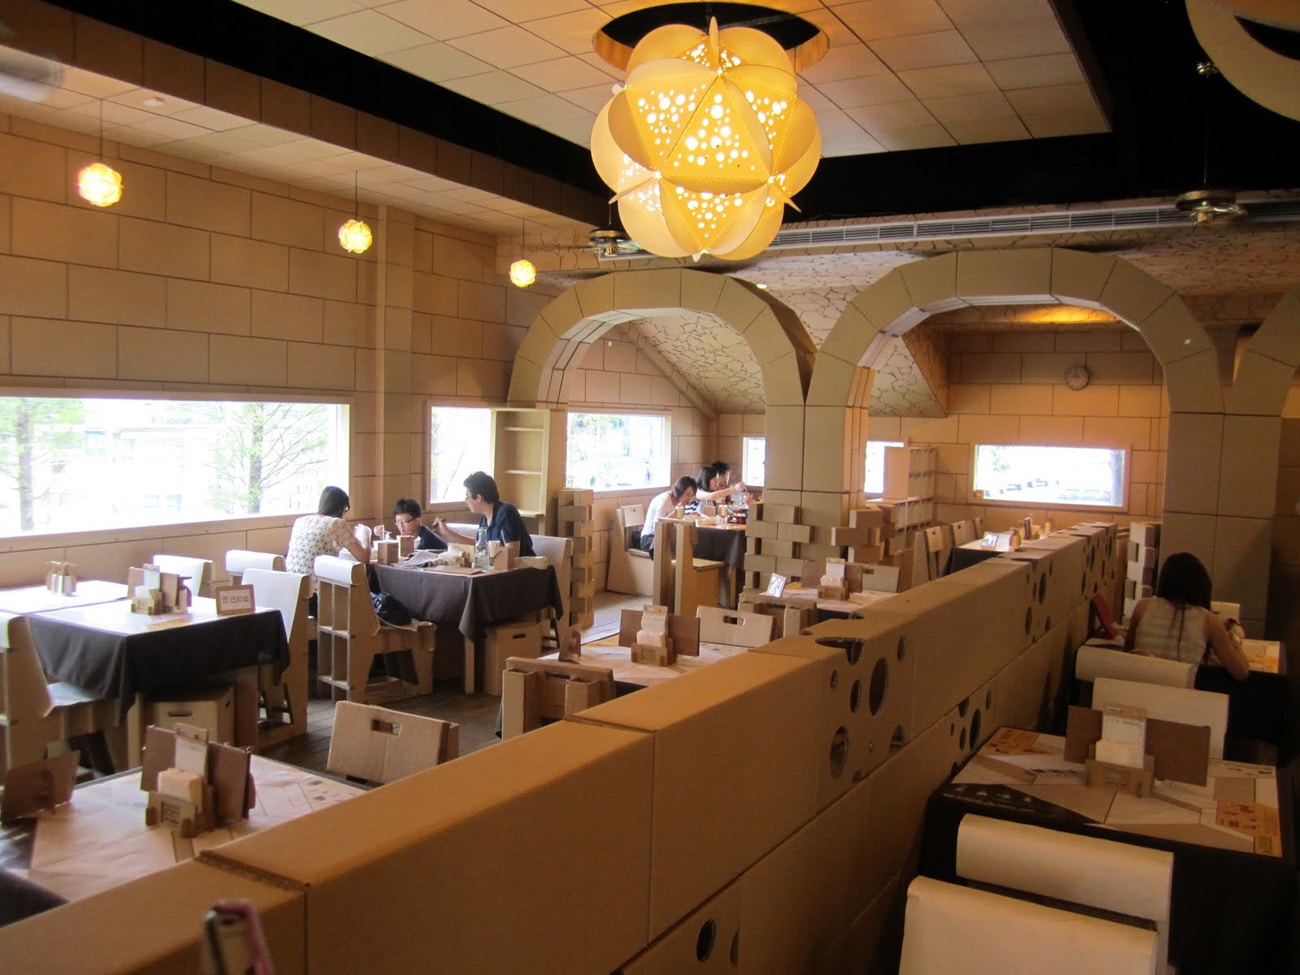 Cardboard Design: An Elegant Restaurant Created From Cardboard